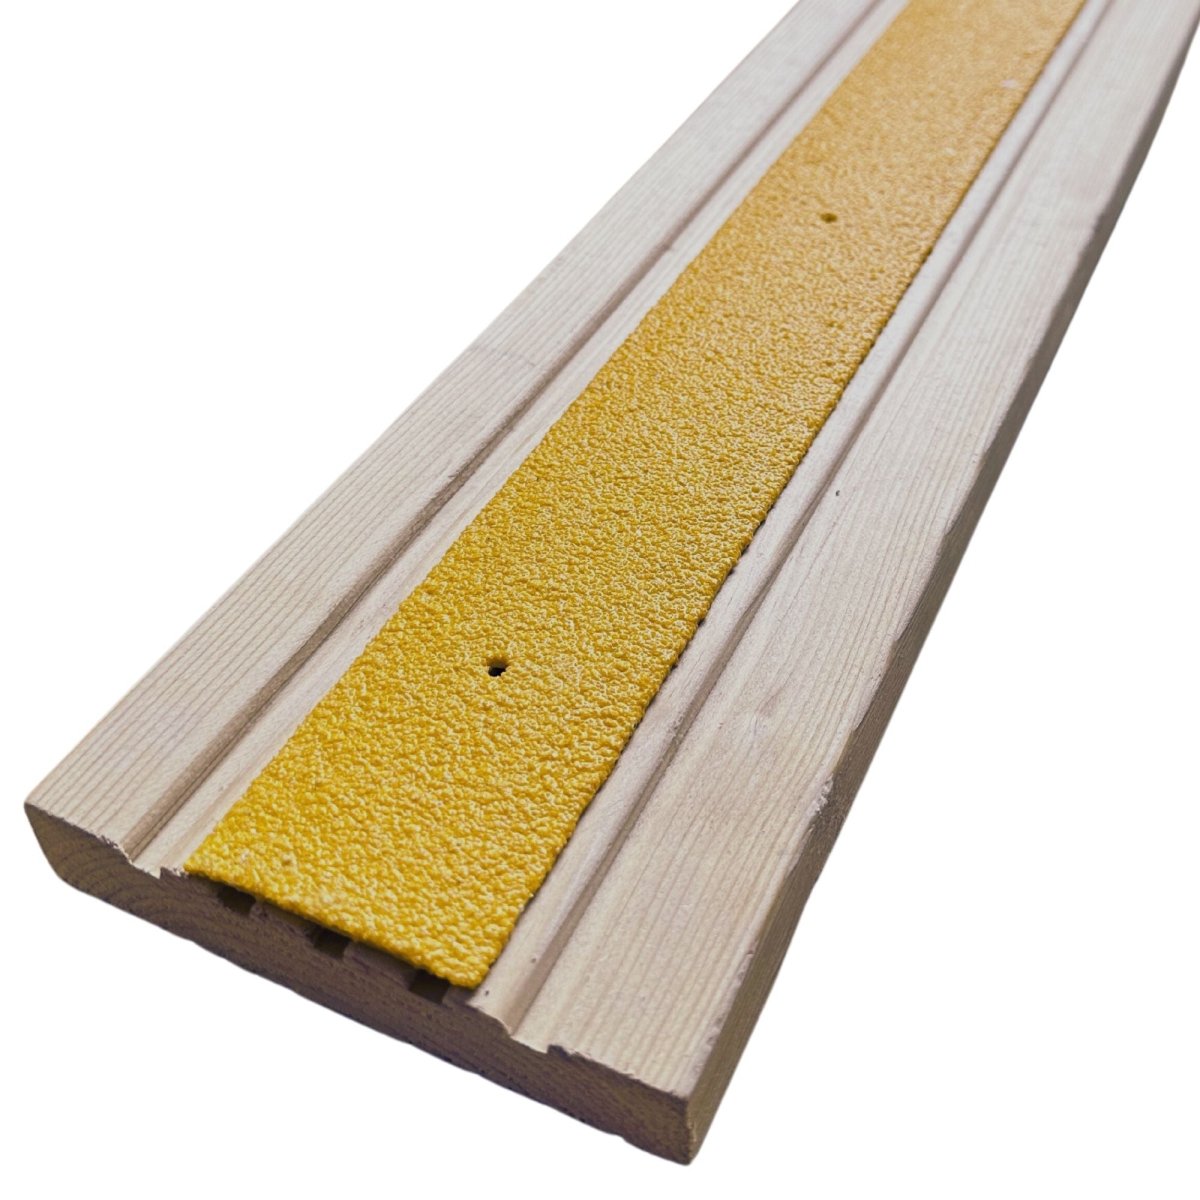 Non Slip Decking Strips GRP Heavy Duty Pro Grade 50mm - YELLOW - Slips Away - Decking strips - decking strip 600mm x 50mm yellow -